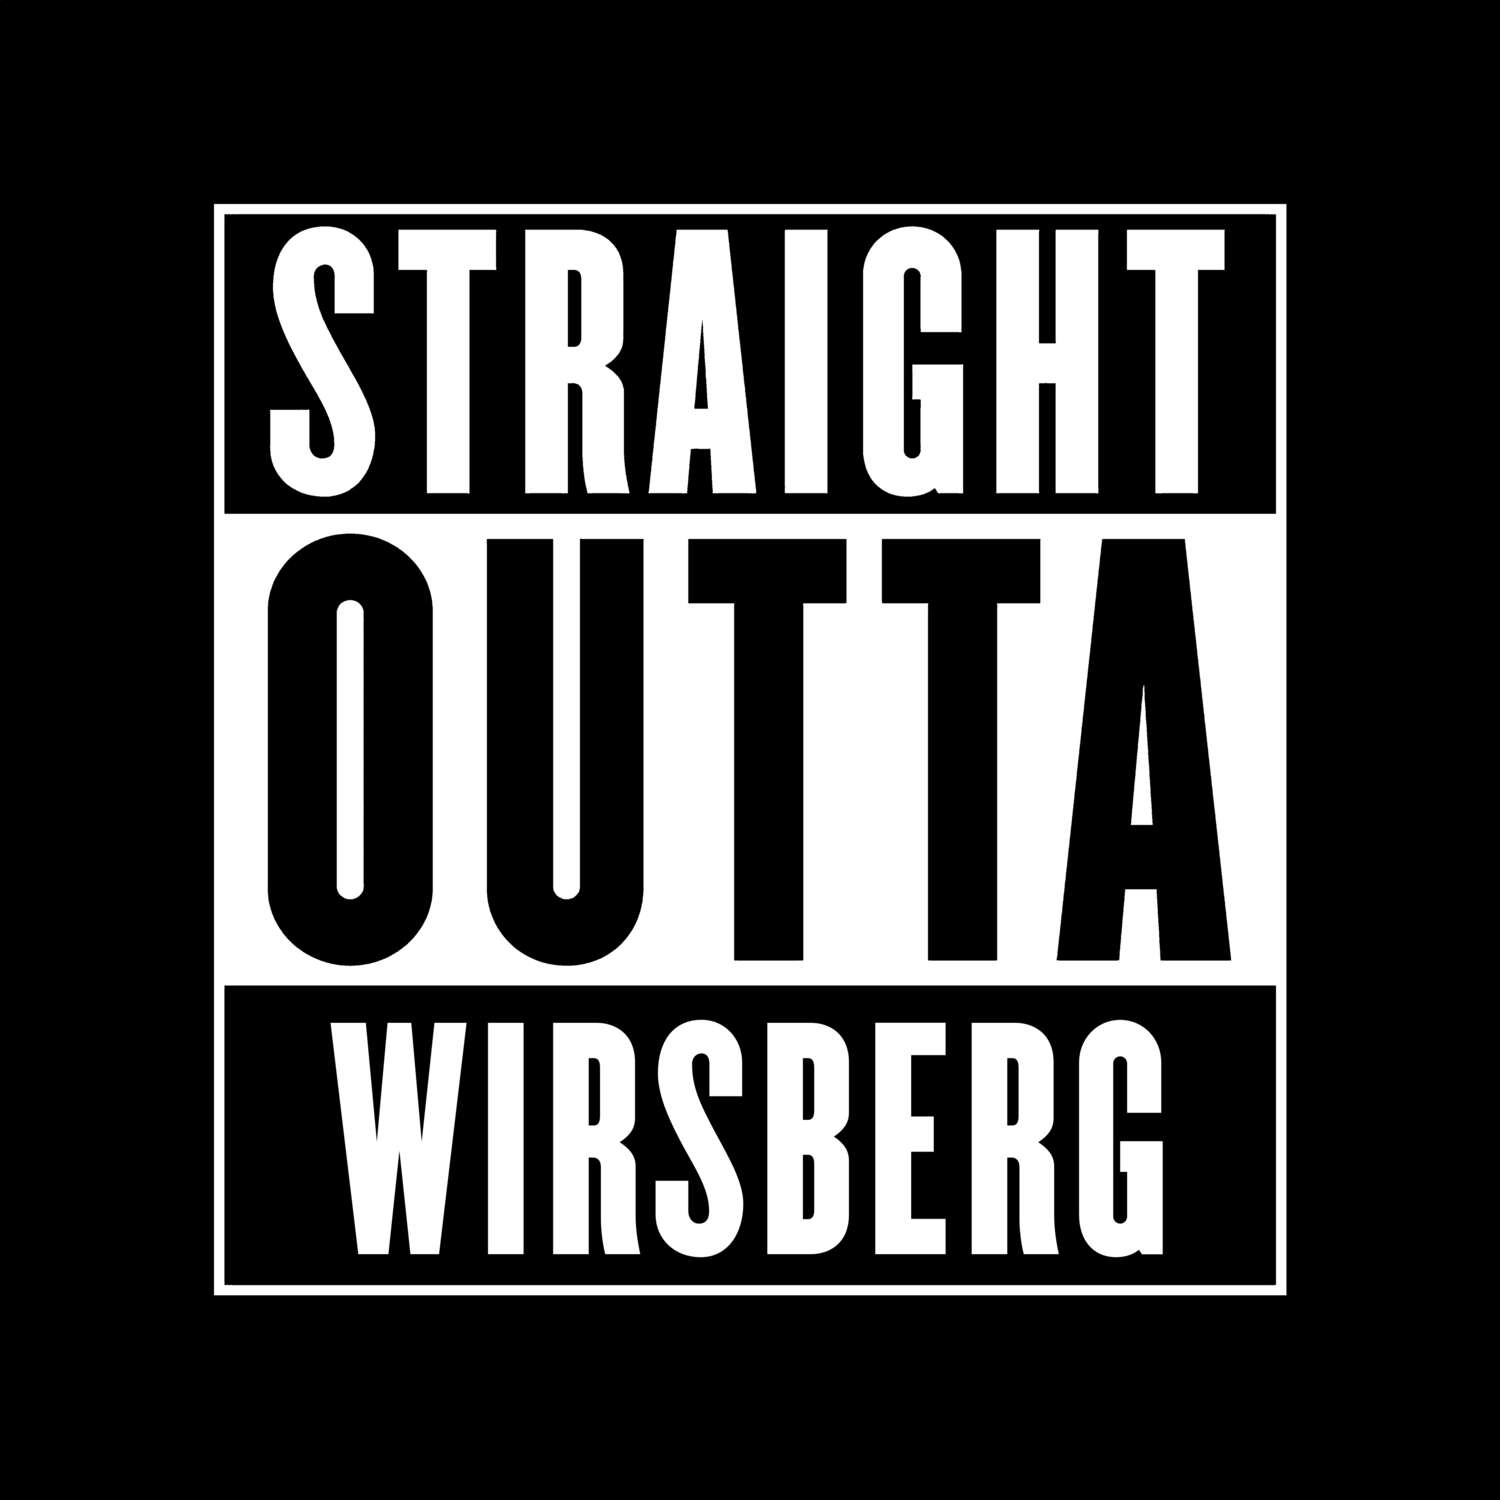 Wirsberg T-Shirt »Straight Outta«